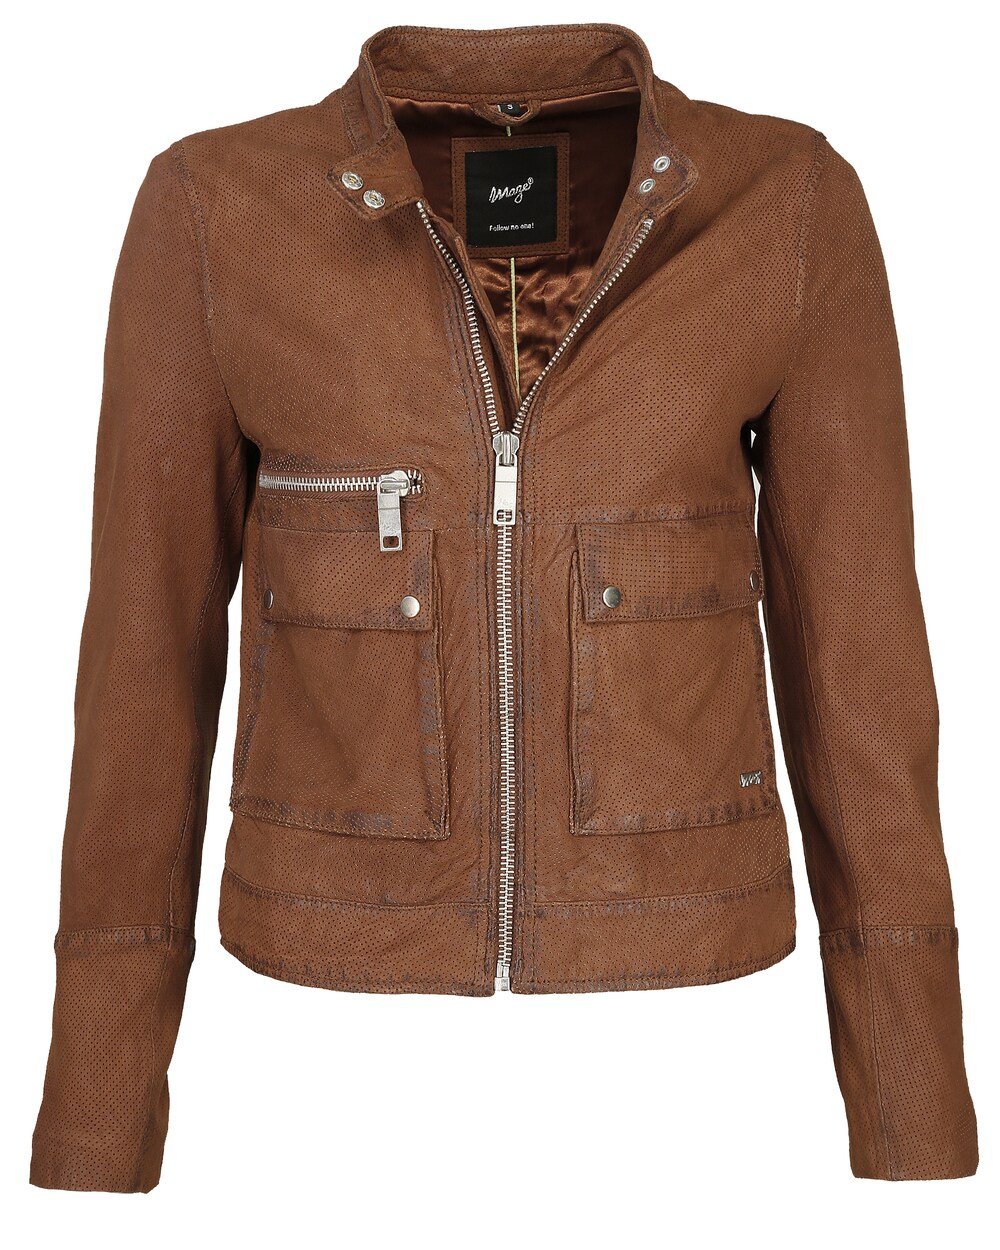 Межсезонная куртка Maze Clermont, коричневый